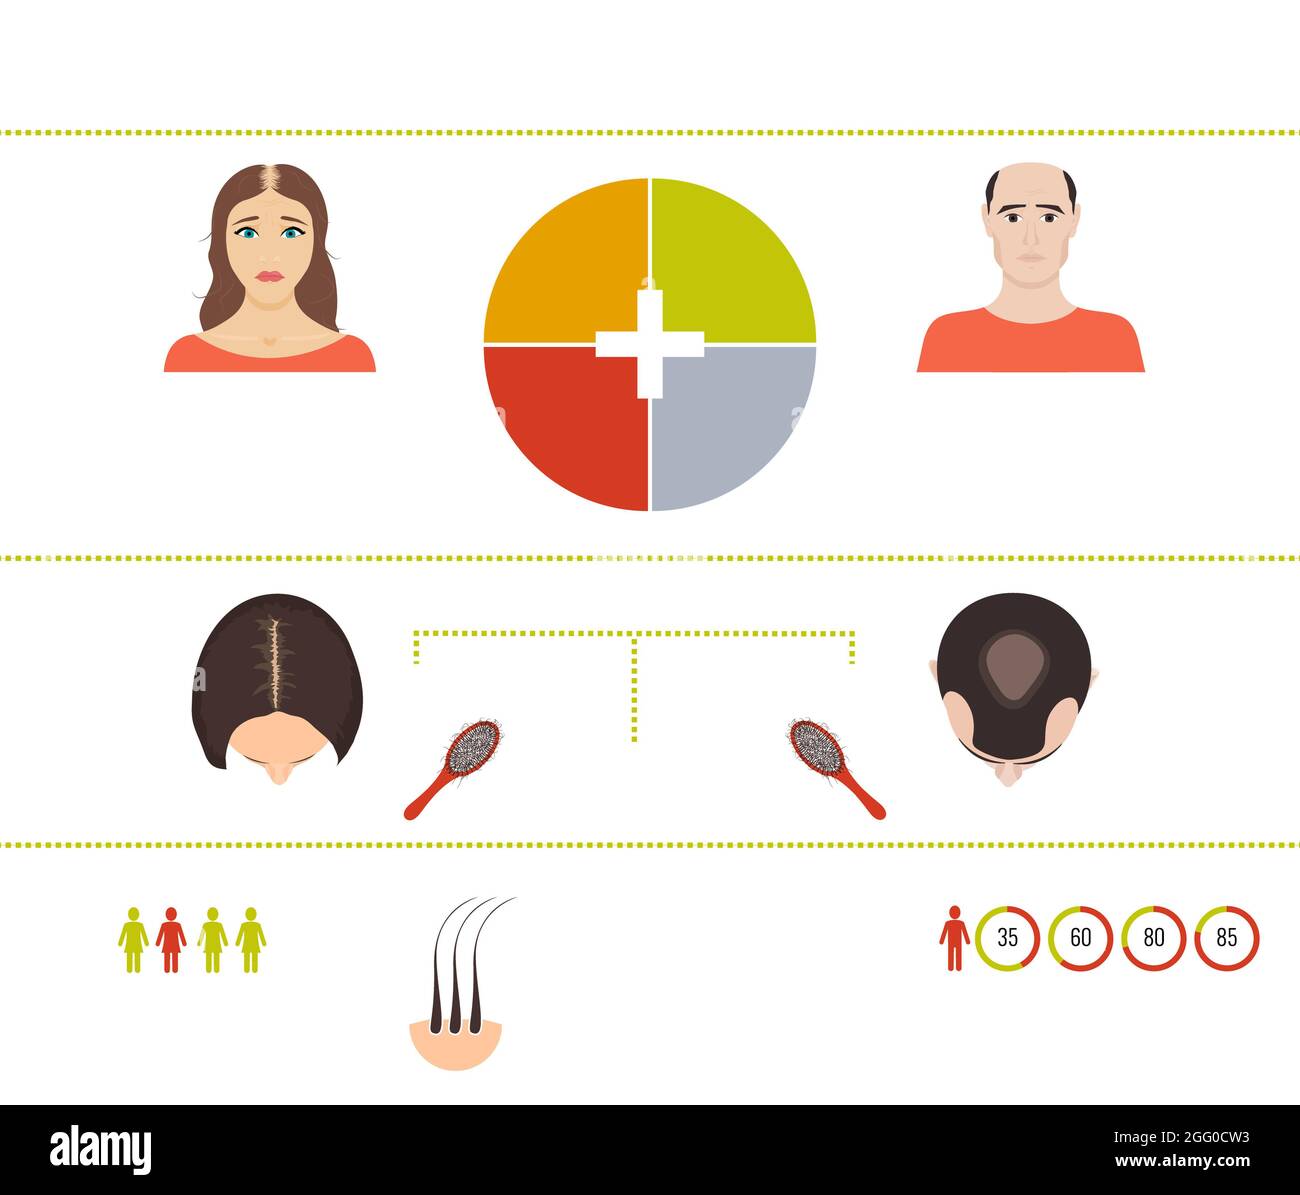 Hair loss symptoms in men and women, illustration. Stock Photo